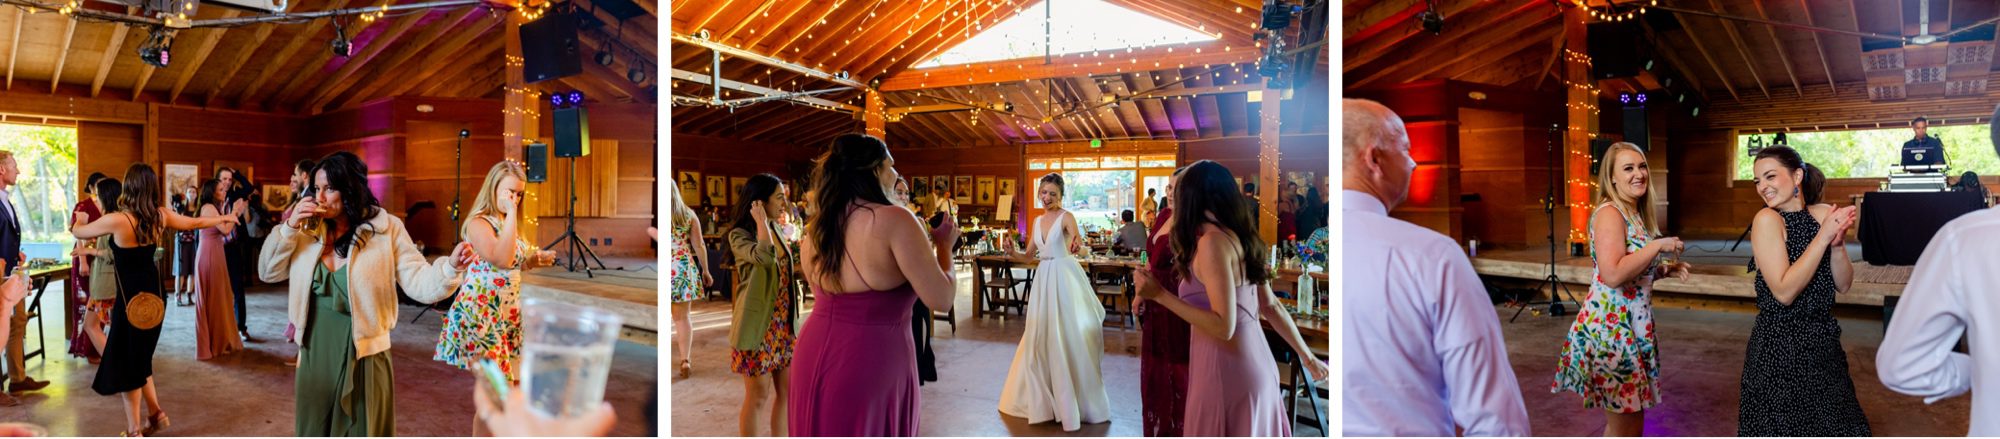 Planet Bluegrass Wedding venue in Lyons Colorado: Colorado Wedding Photographer, Wedding reception